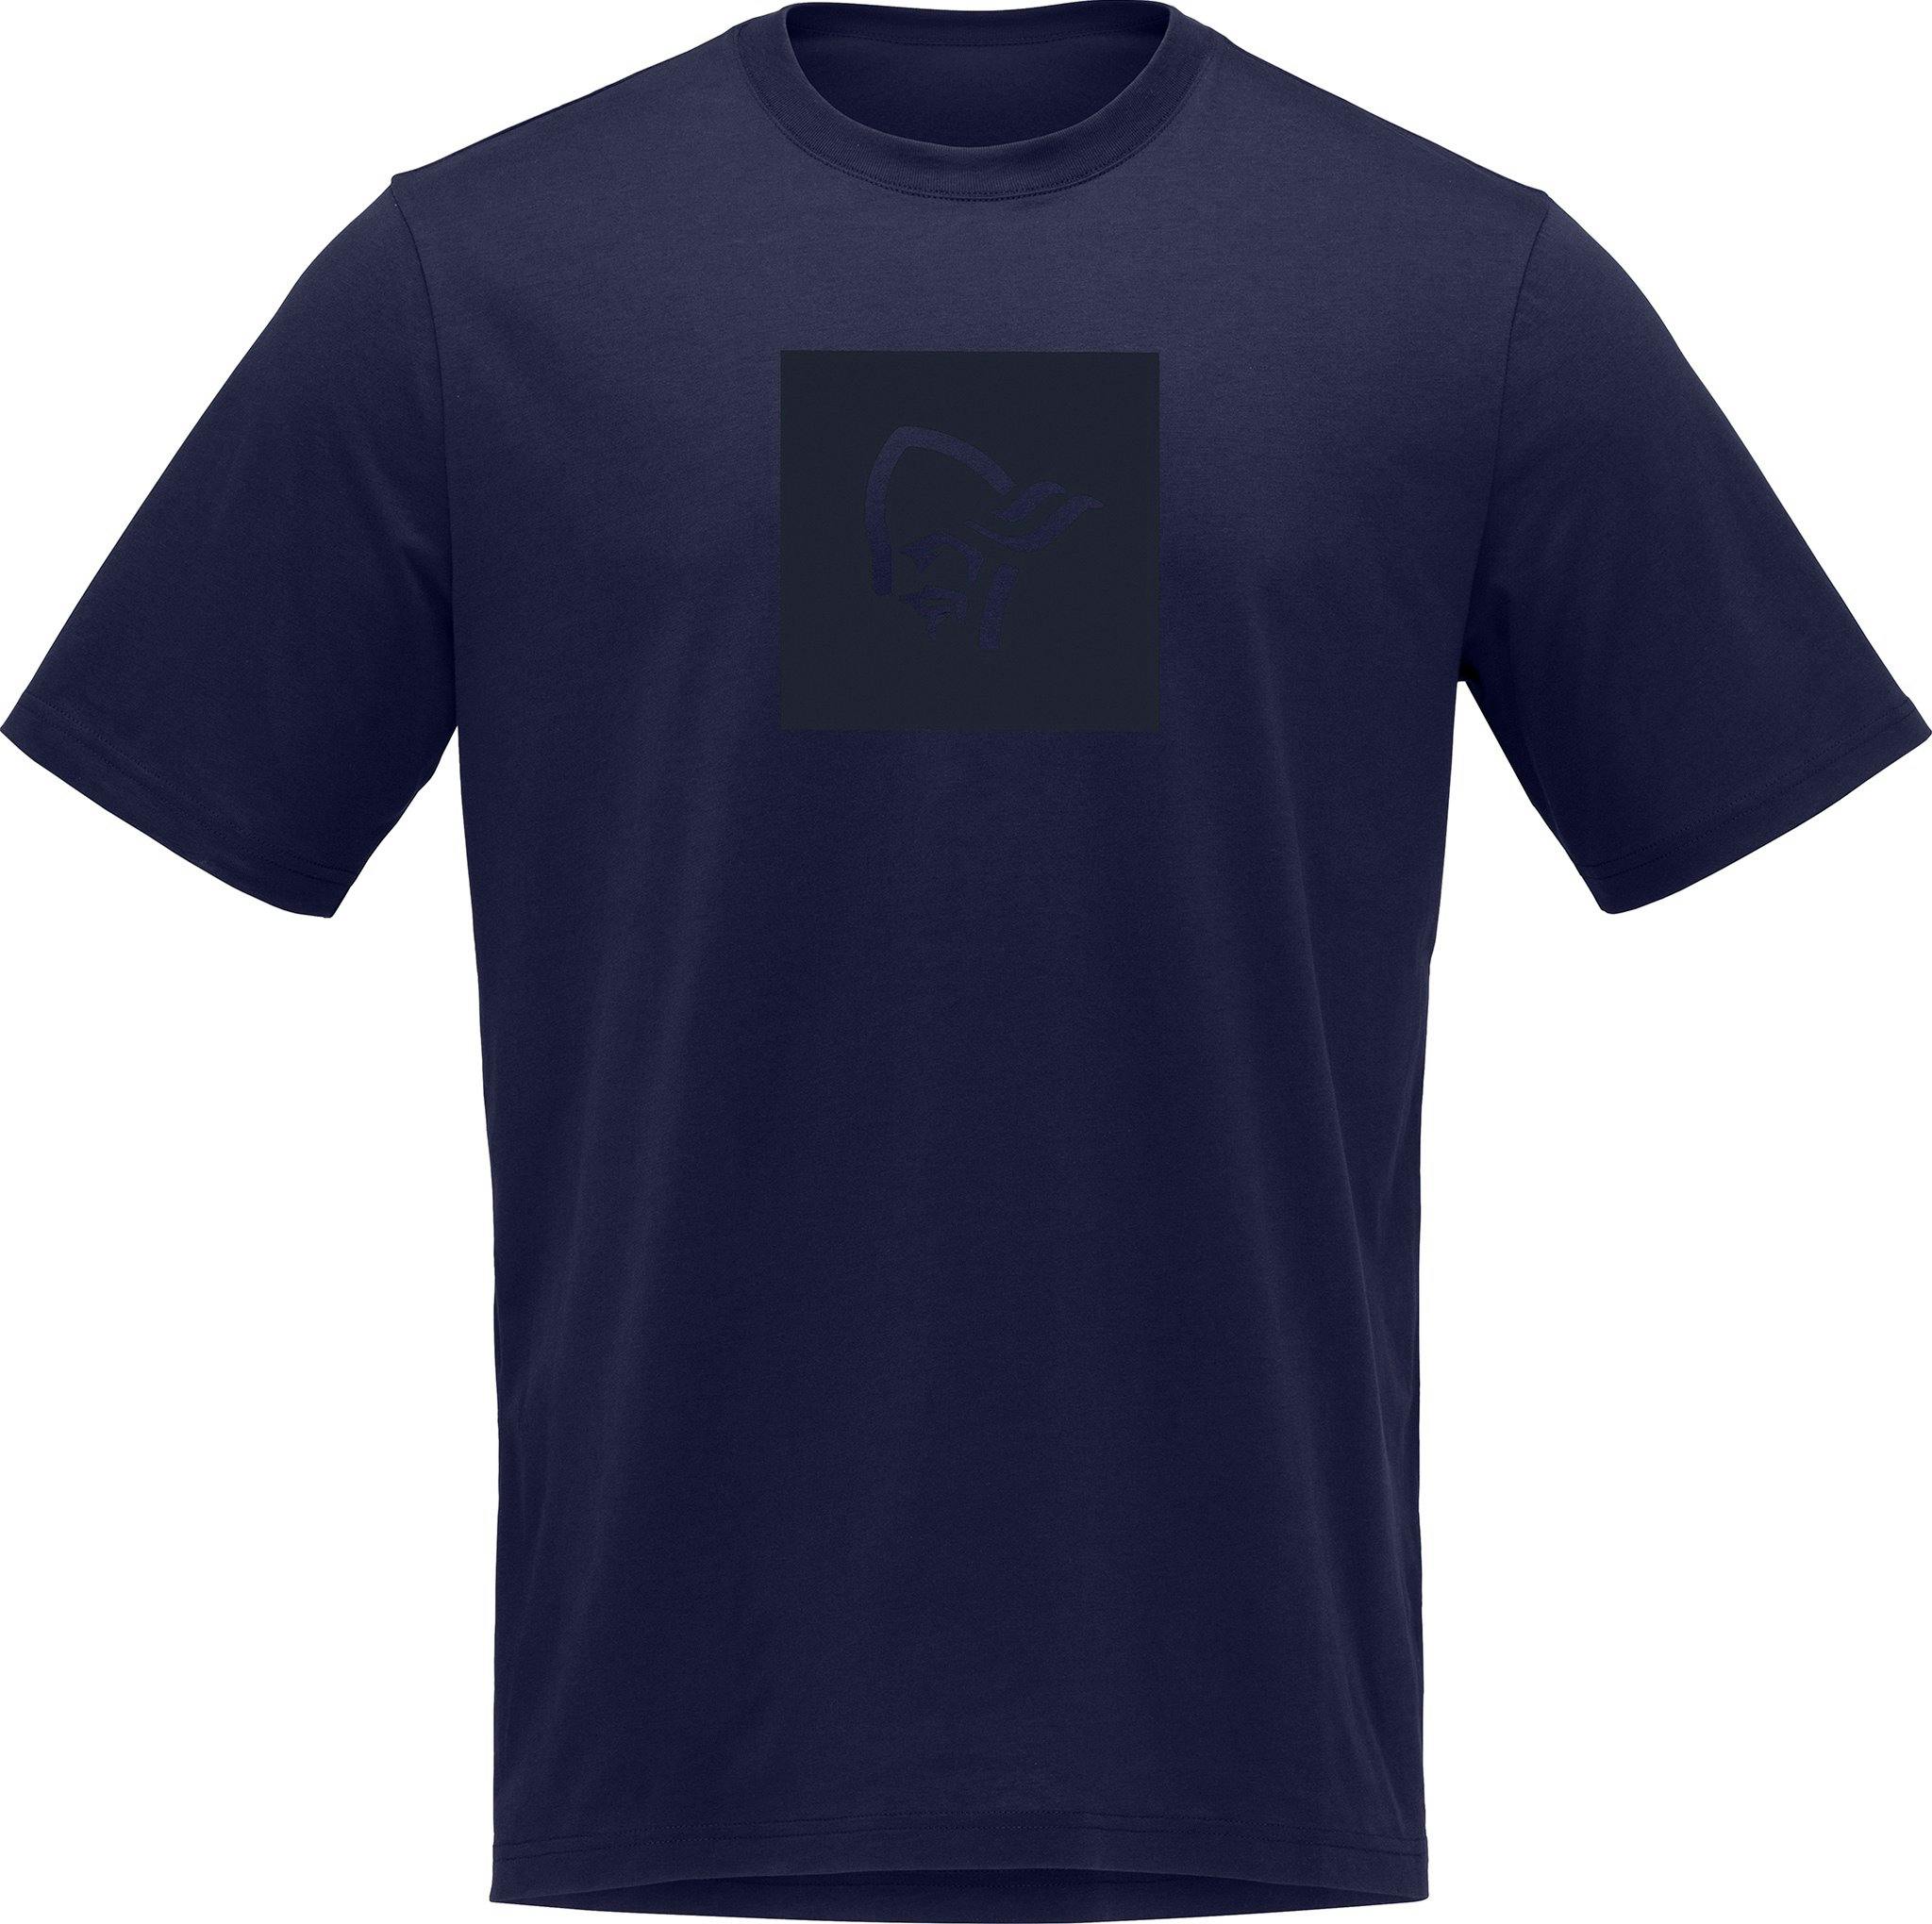 Product image for /29 Cotton Square Viking T-Shirt - Men's